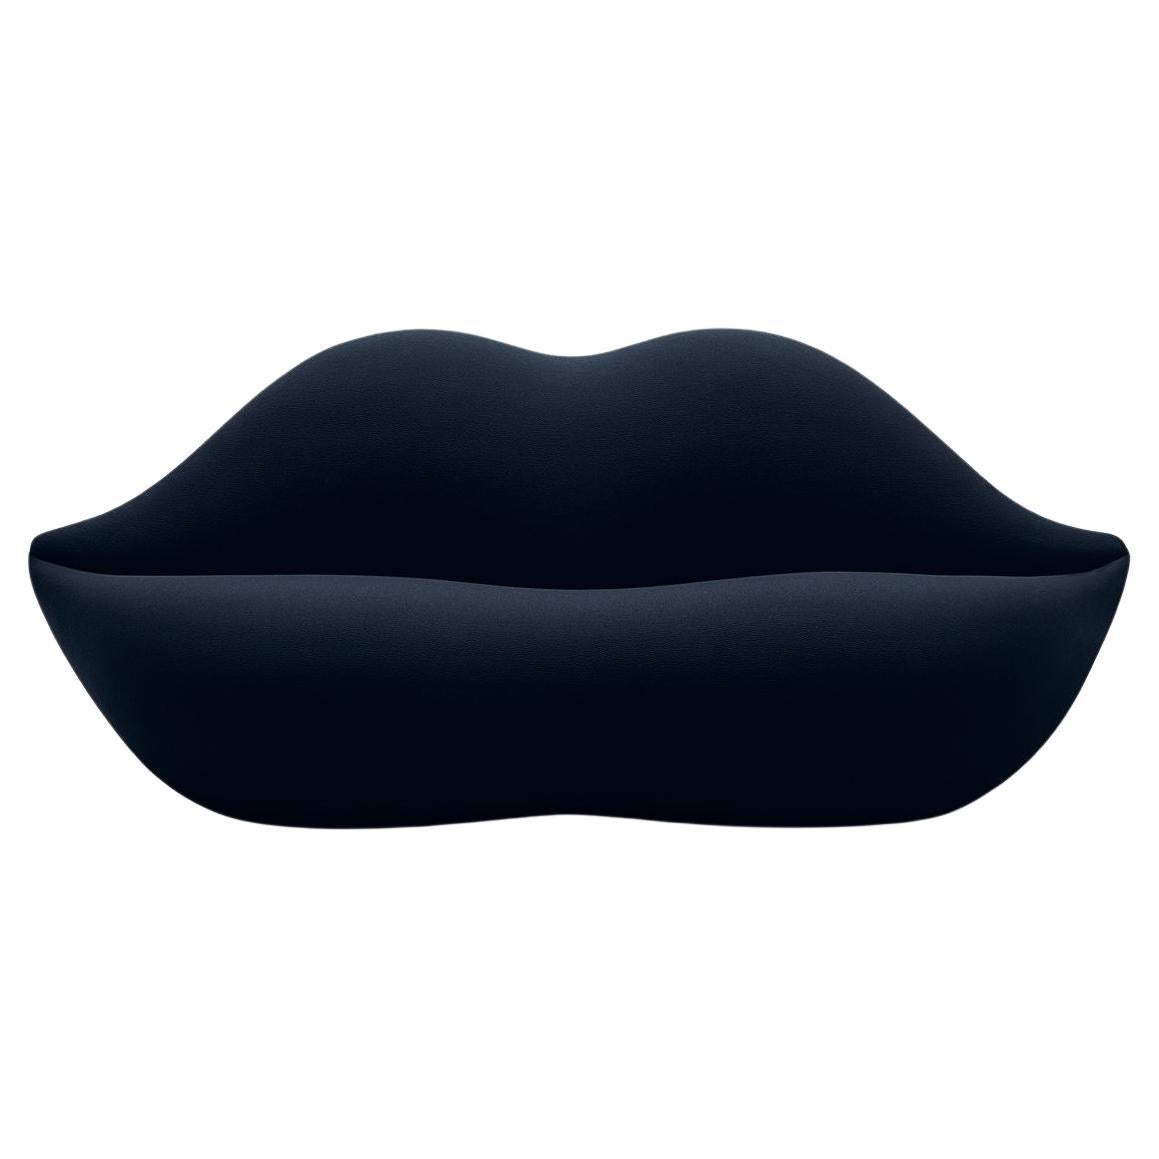 Gufram, canapé Bocca en forme de lèvres, Midnight, par Studio 65